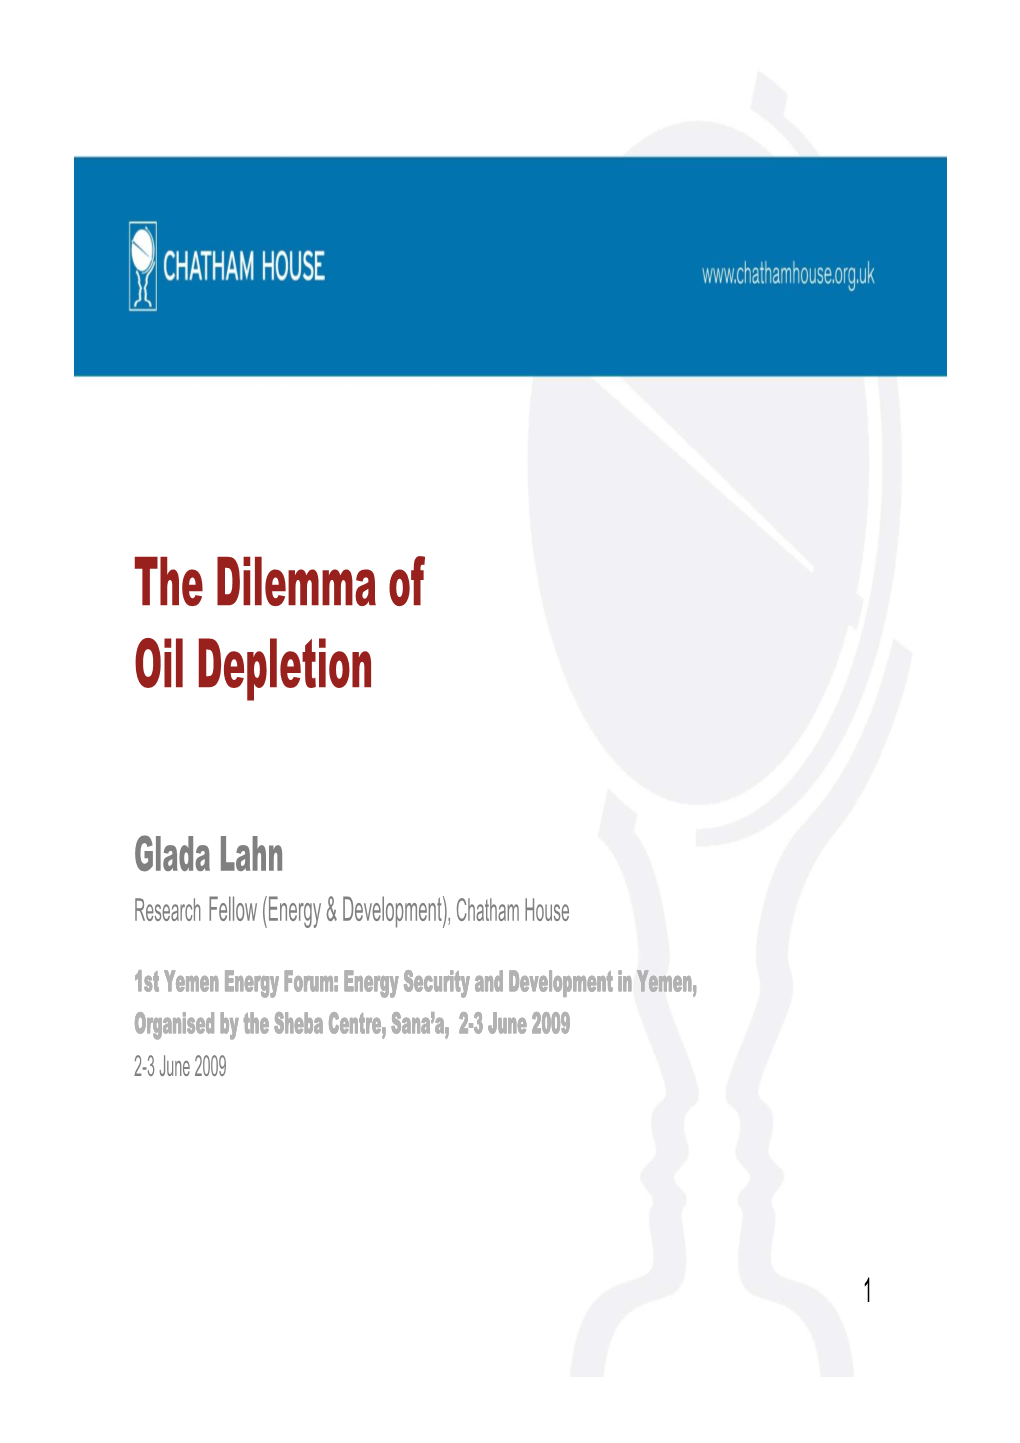 The Dilemma of Oil Depletion